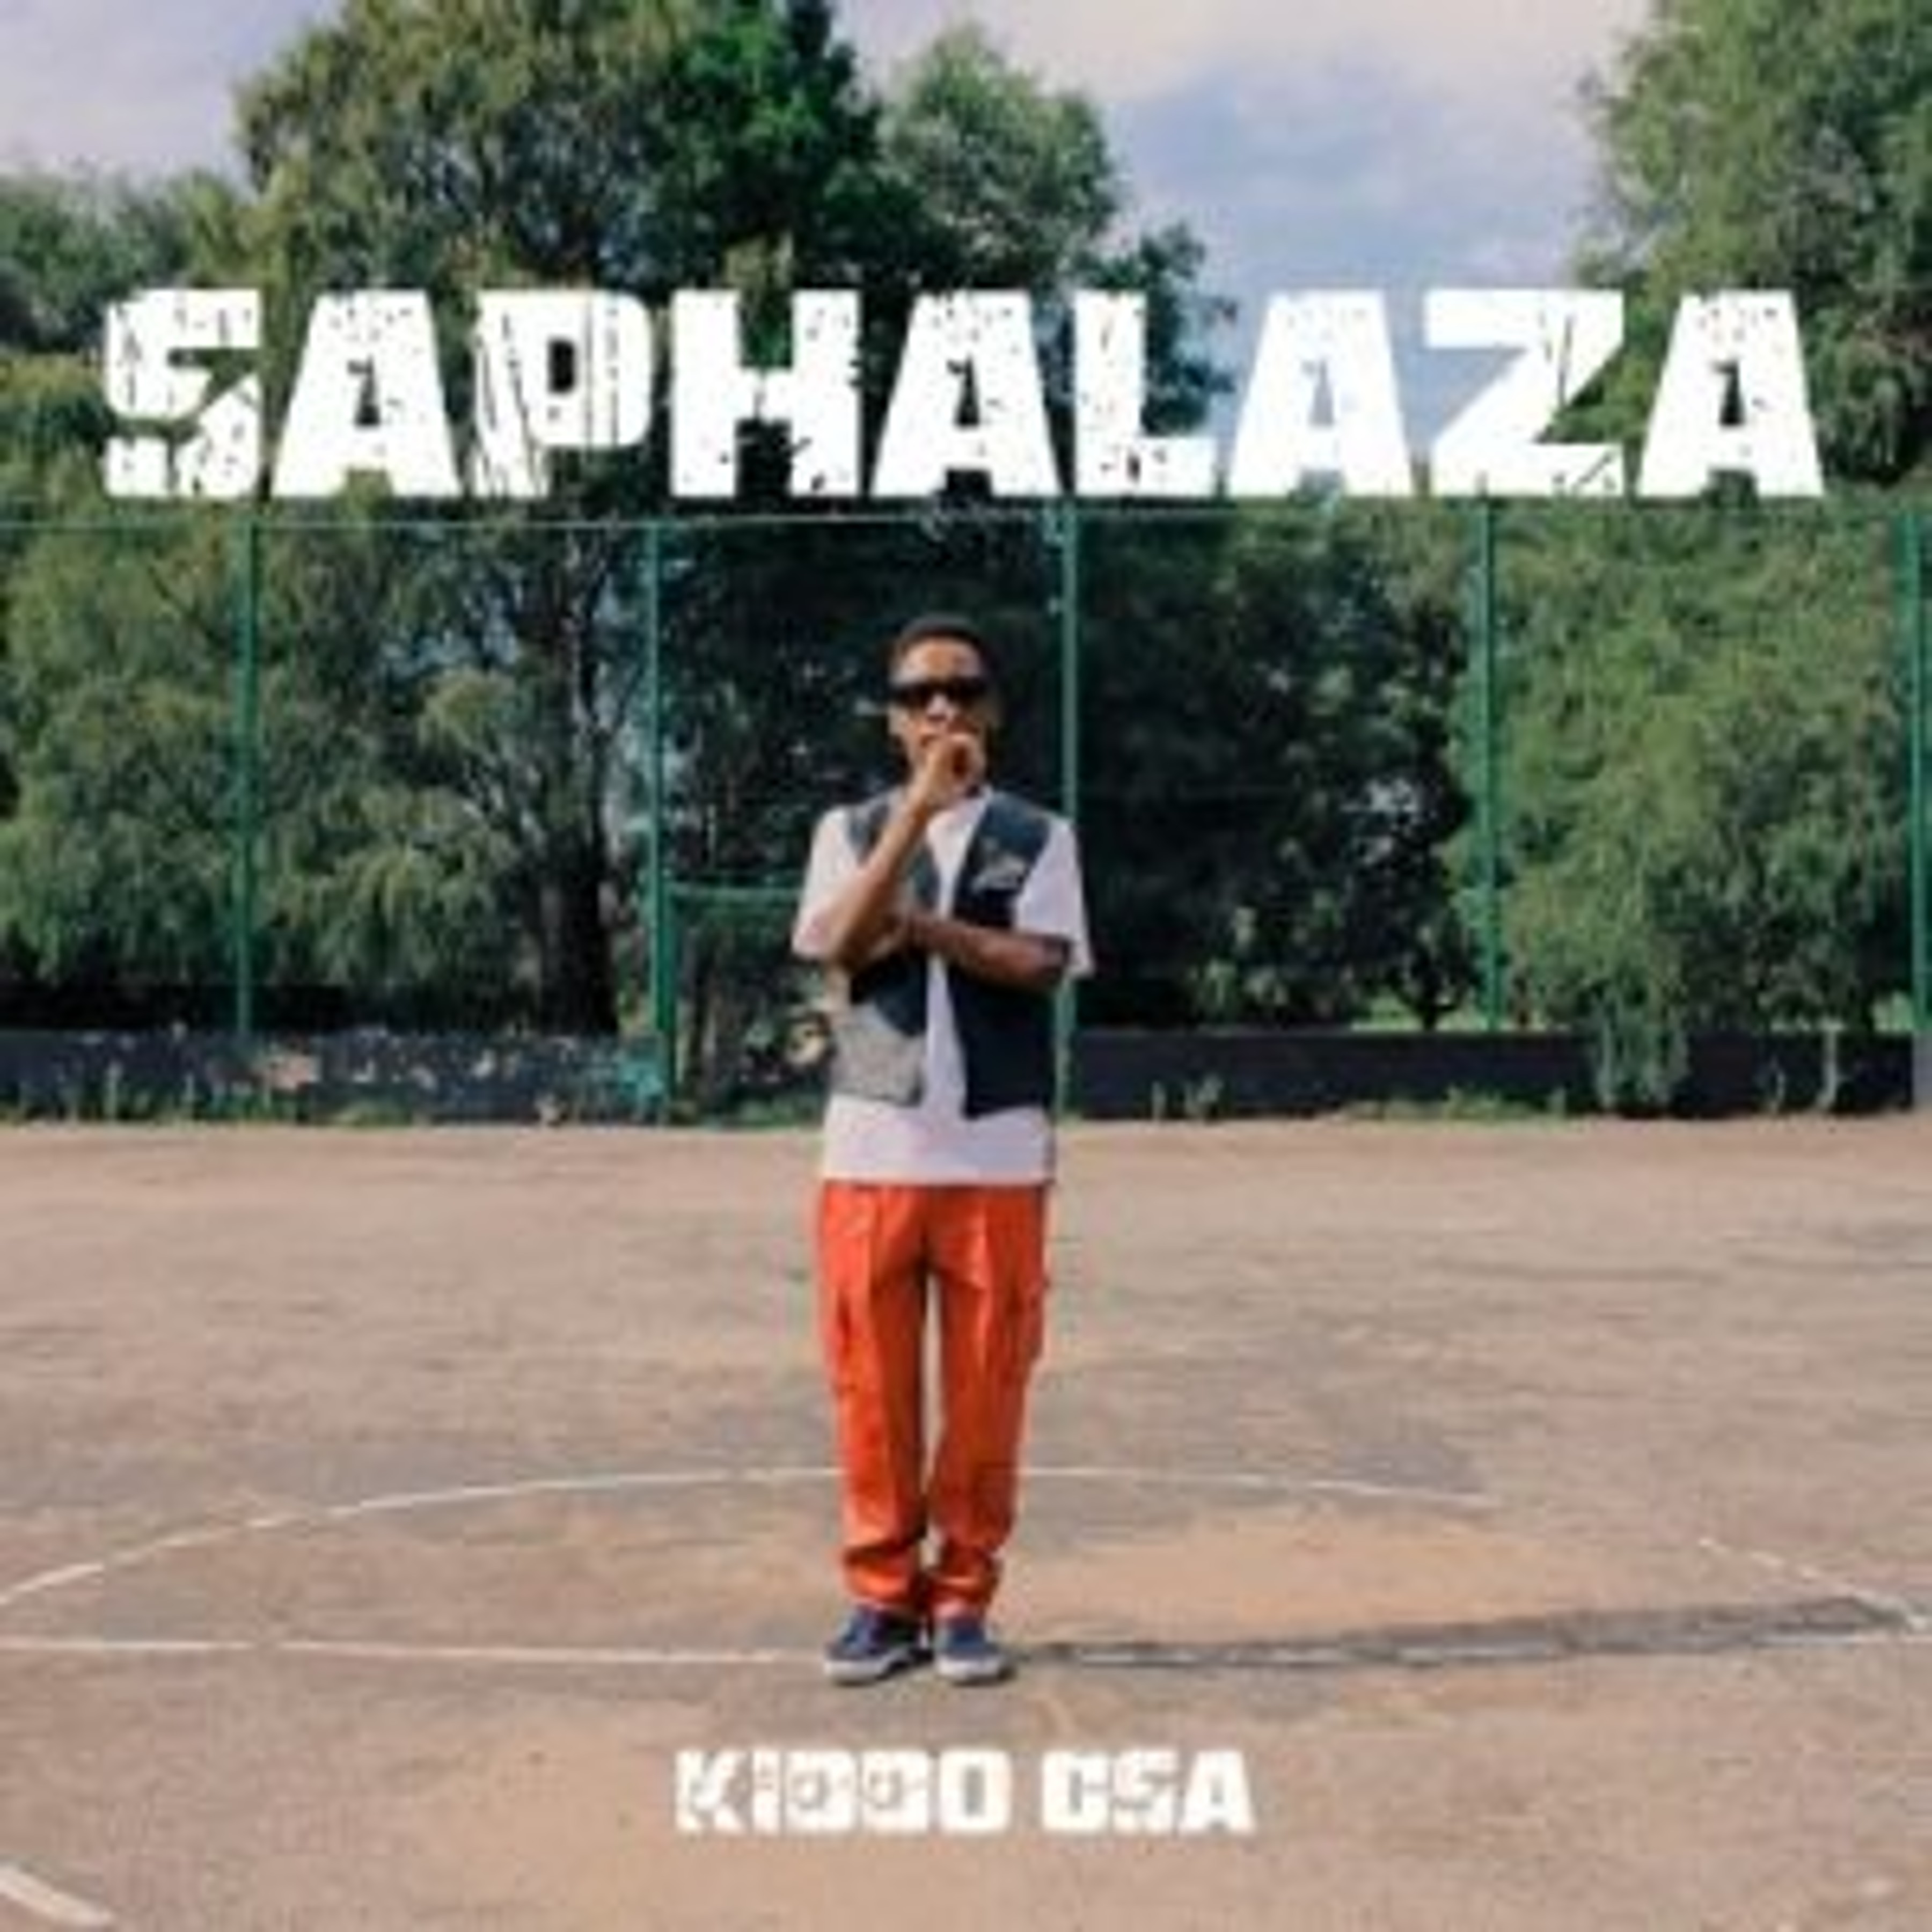 Kiddo CSA – Saphalaza Mp3 Download Fakaza: